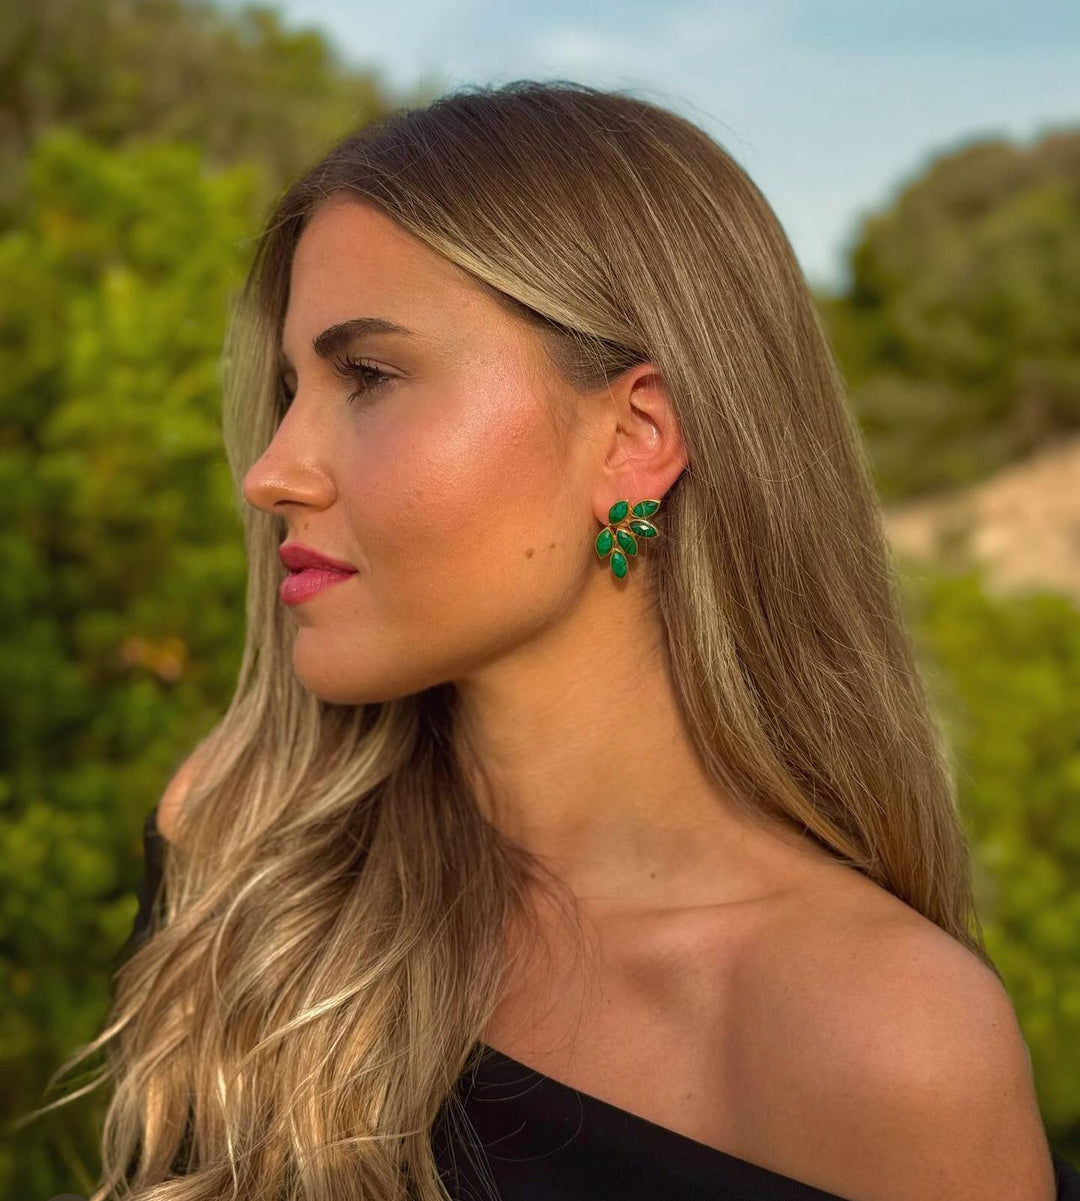 Sofia Emerald stone earrings